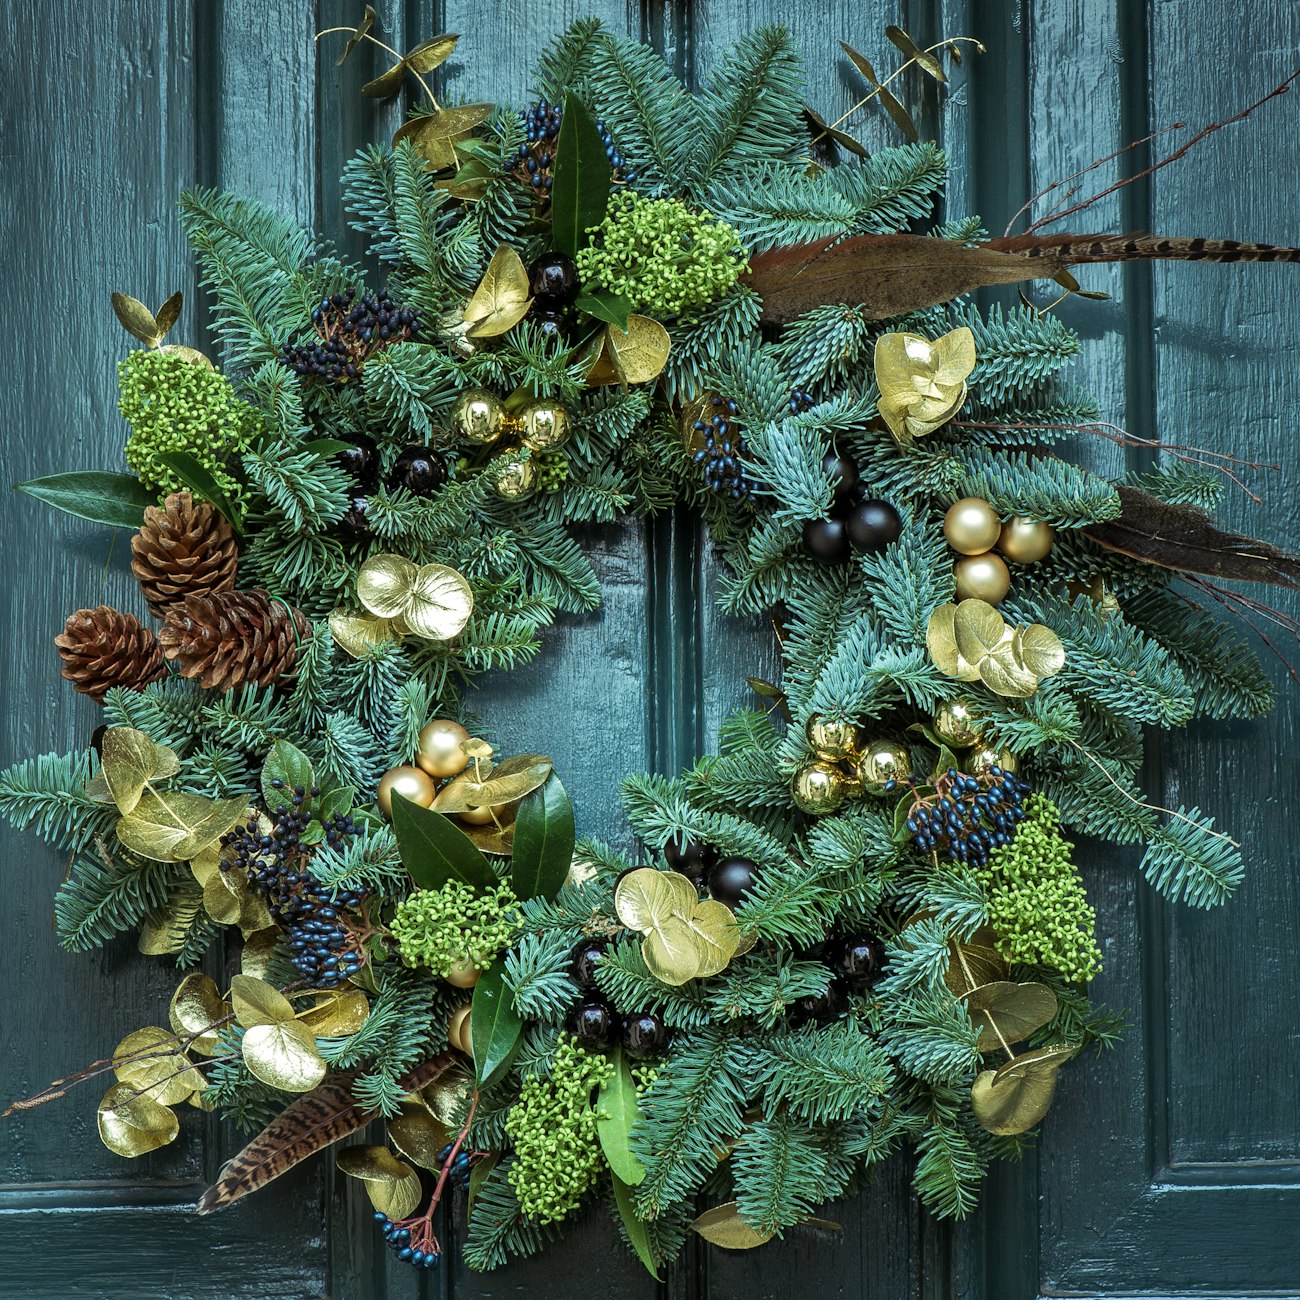 17 Christmas Garden Ideas Festive And Organic Holiday Decorations